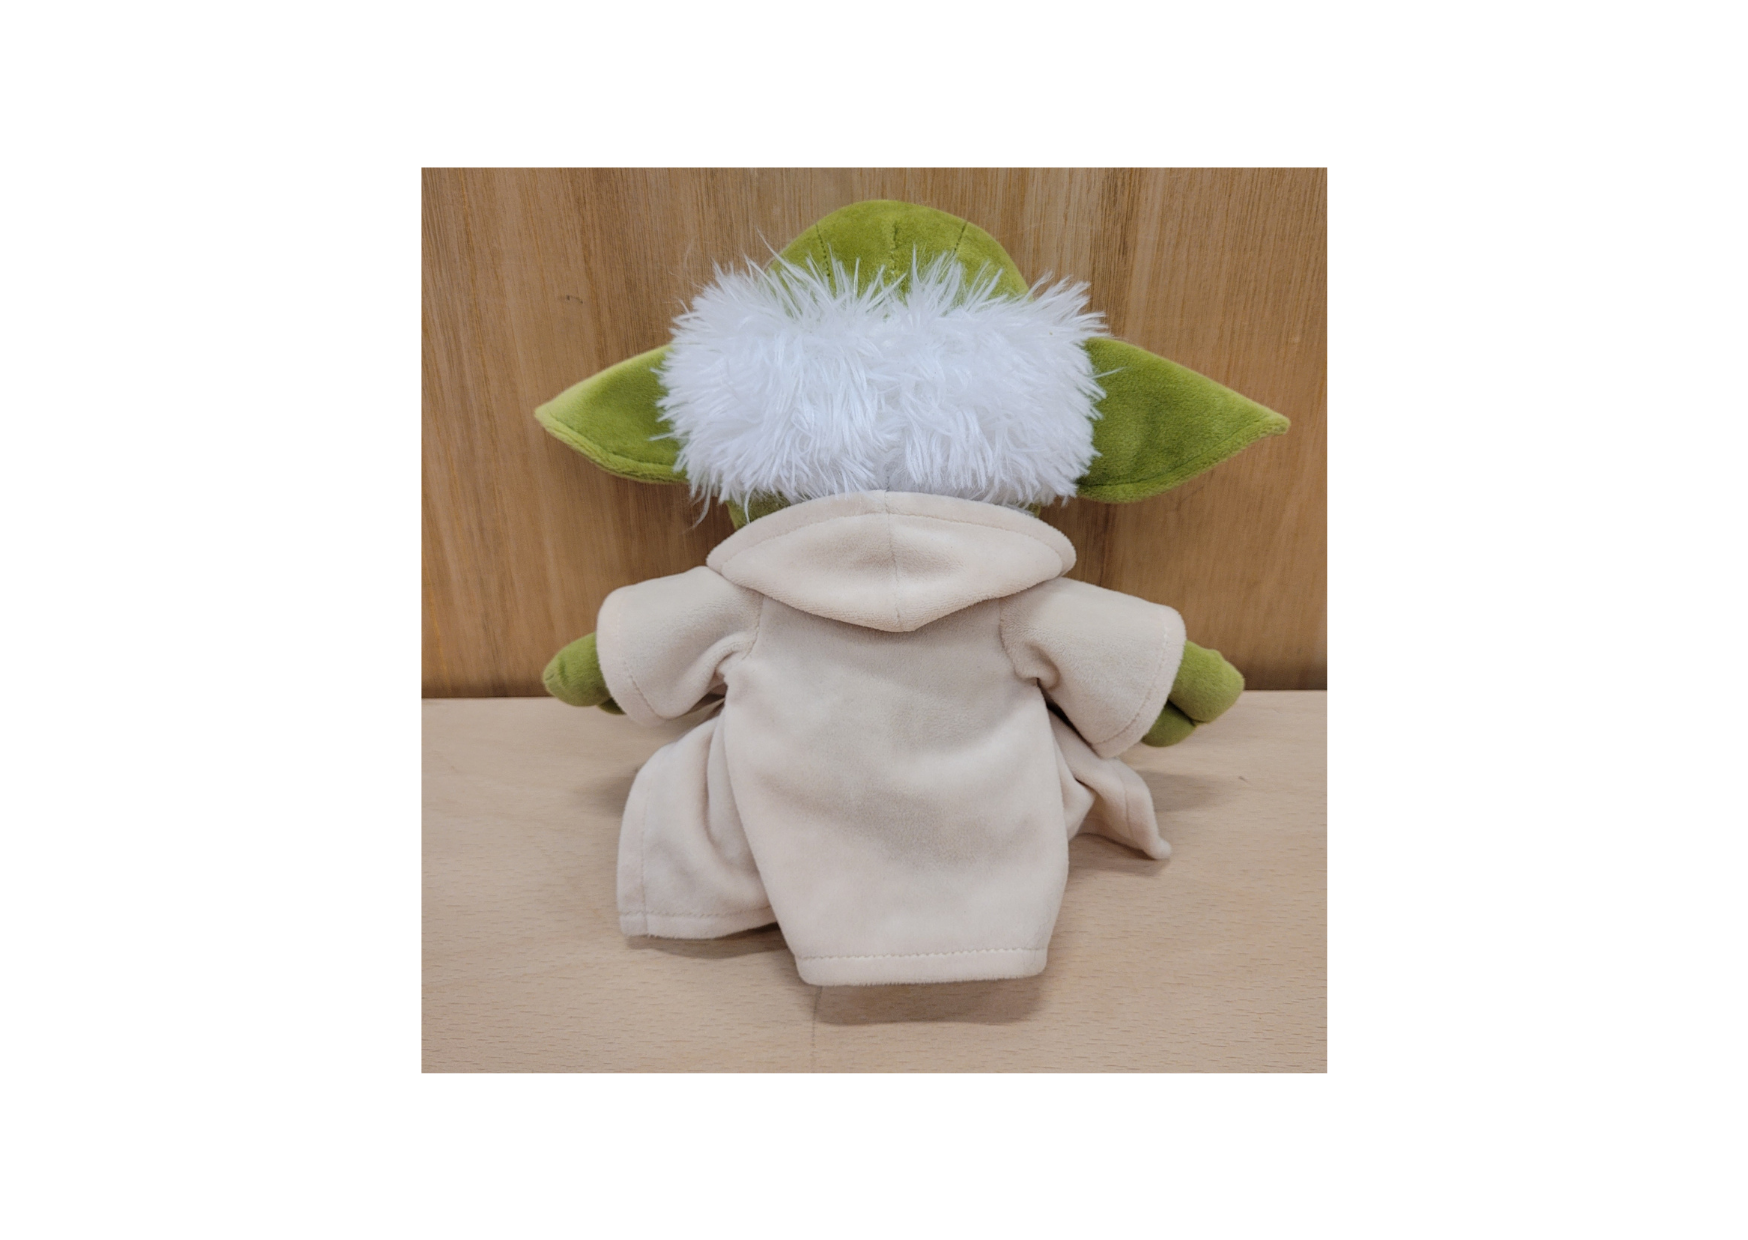 Star Wars Yoda 12" Plush Rear View